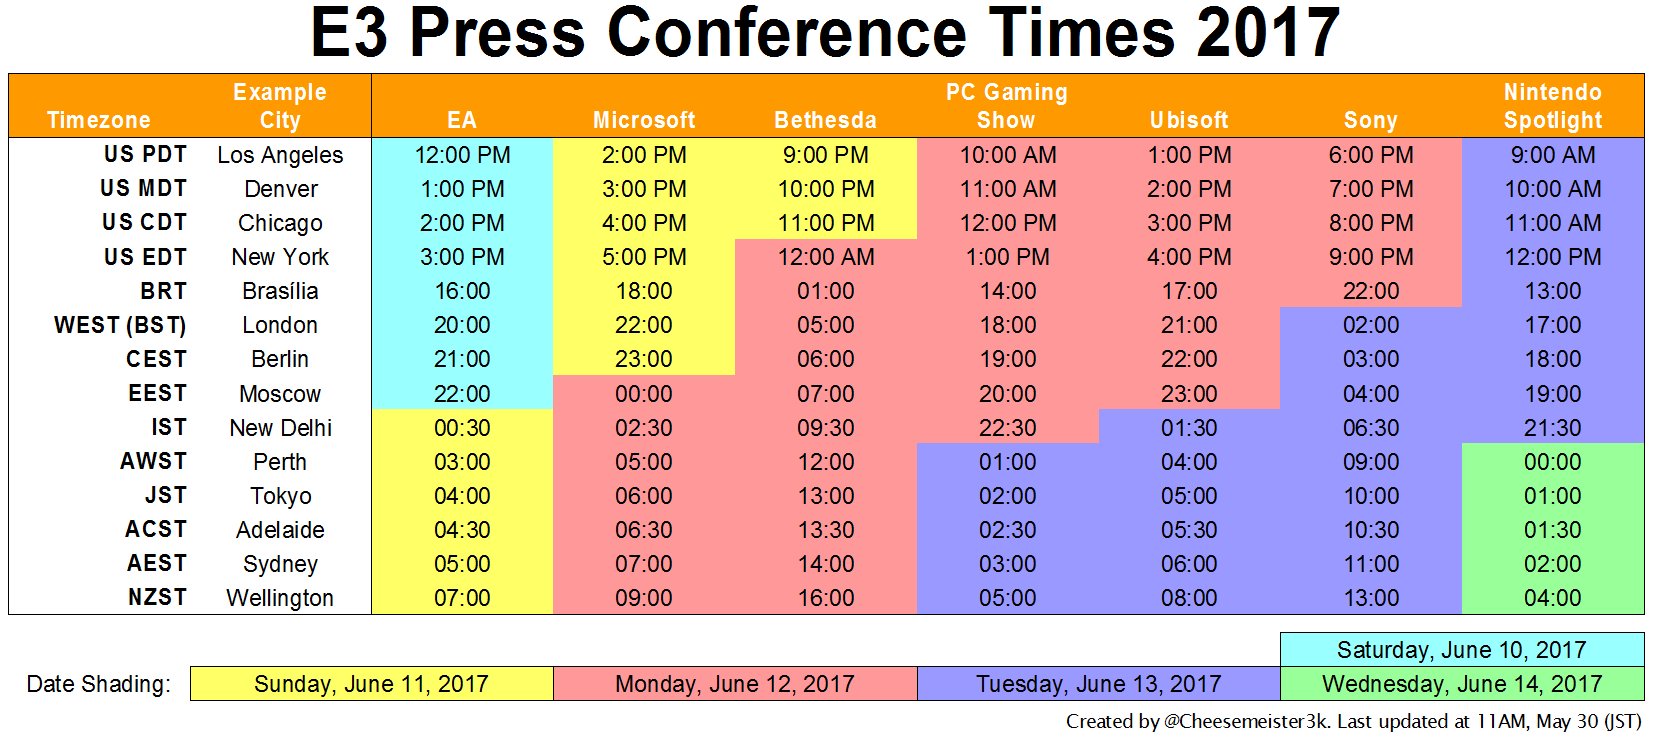 The E3 2017 Press Conference Schedule